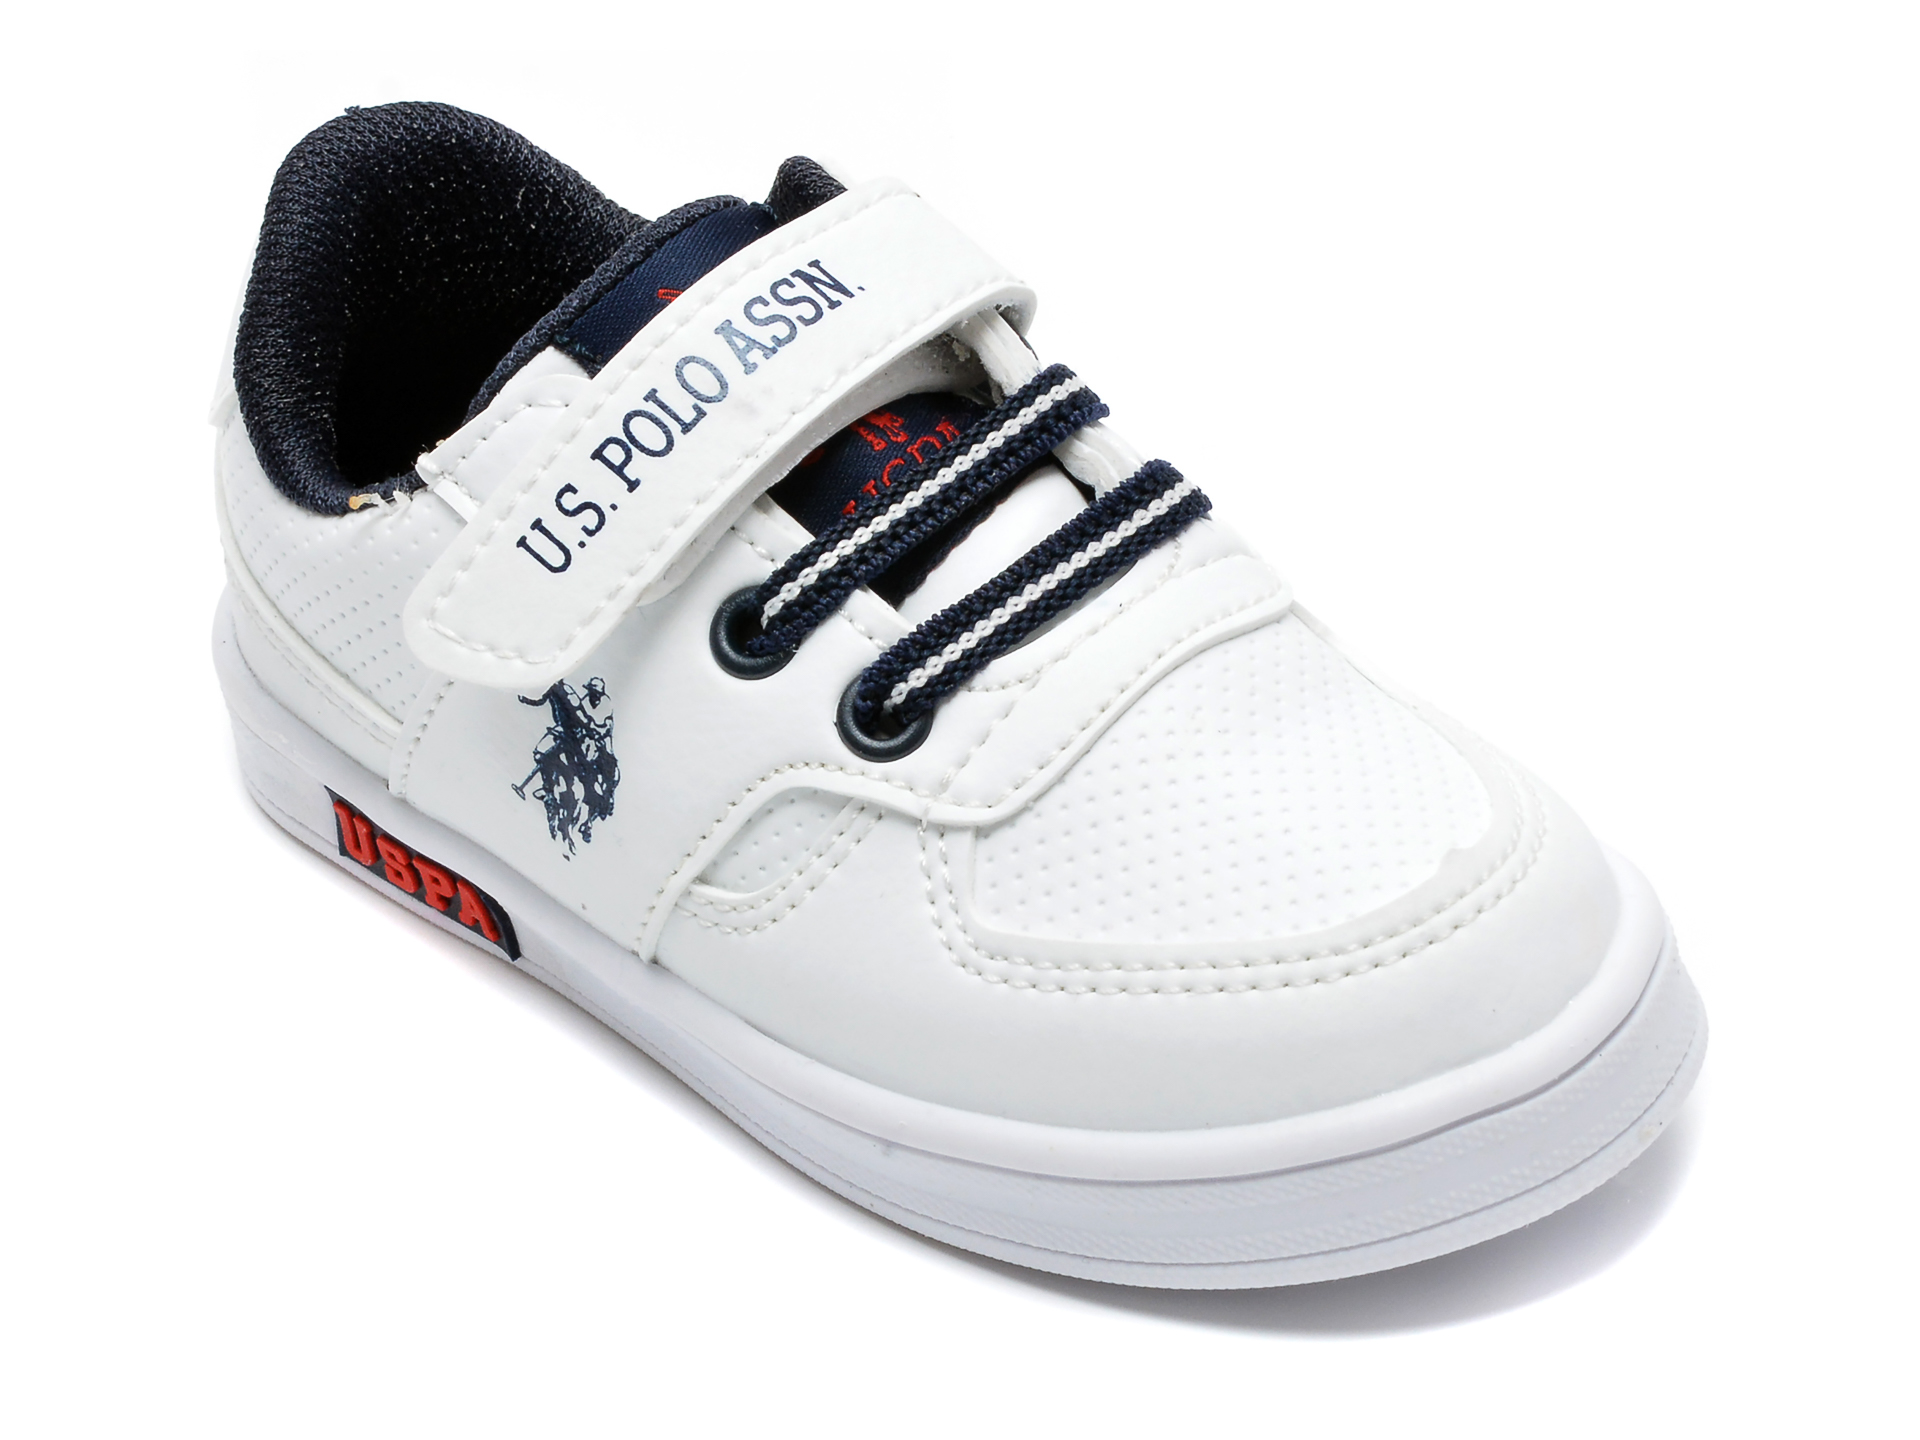 Pantofi sport US POLO ASSN albi, CAME2FX, din piele ecologica